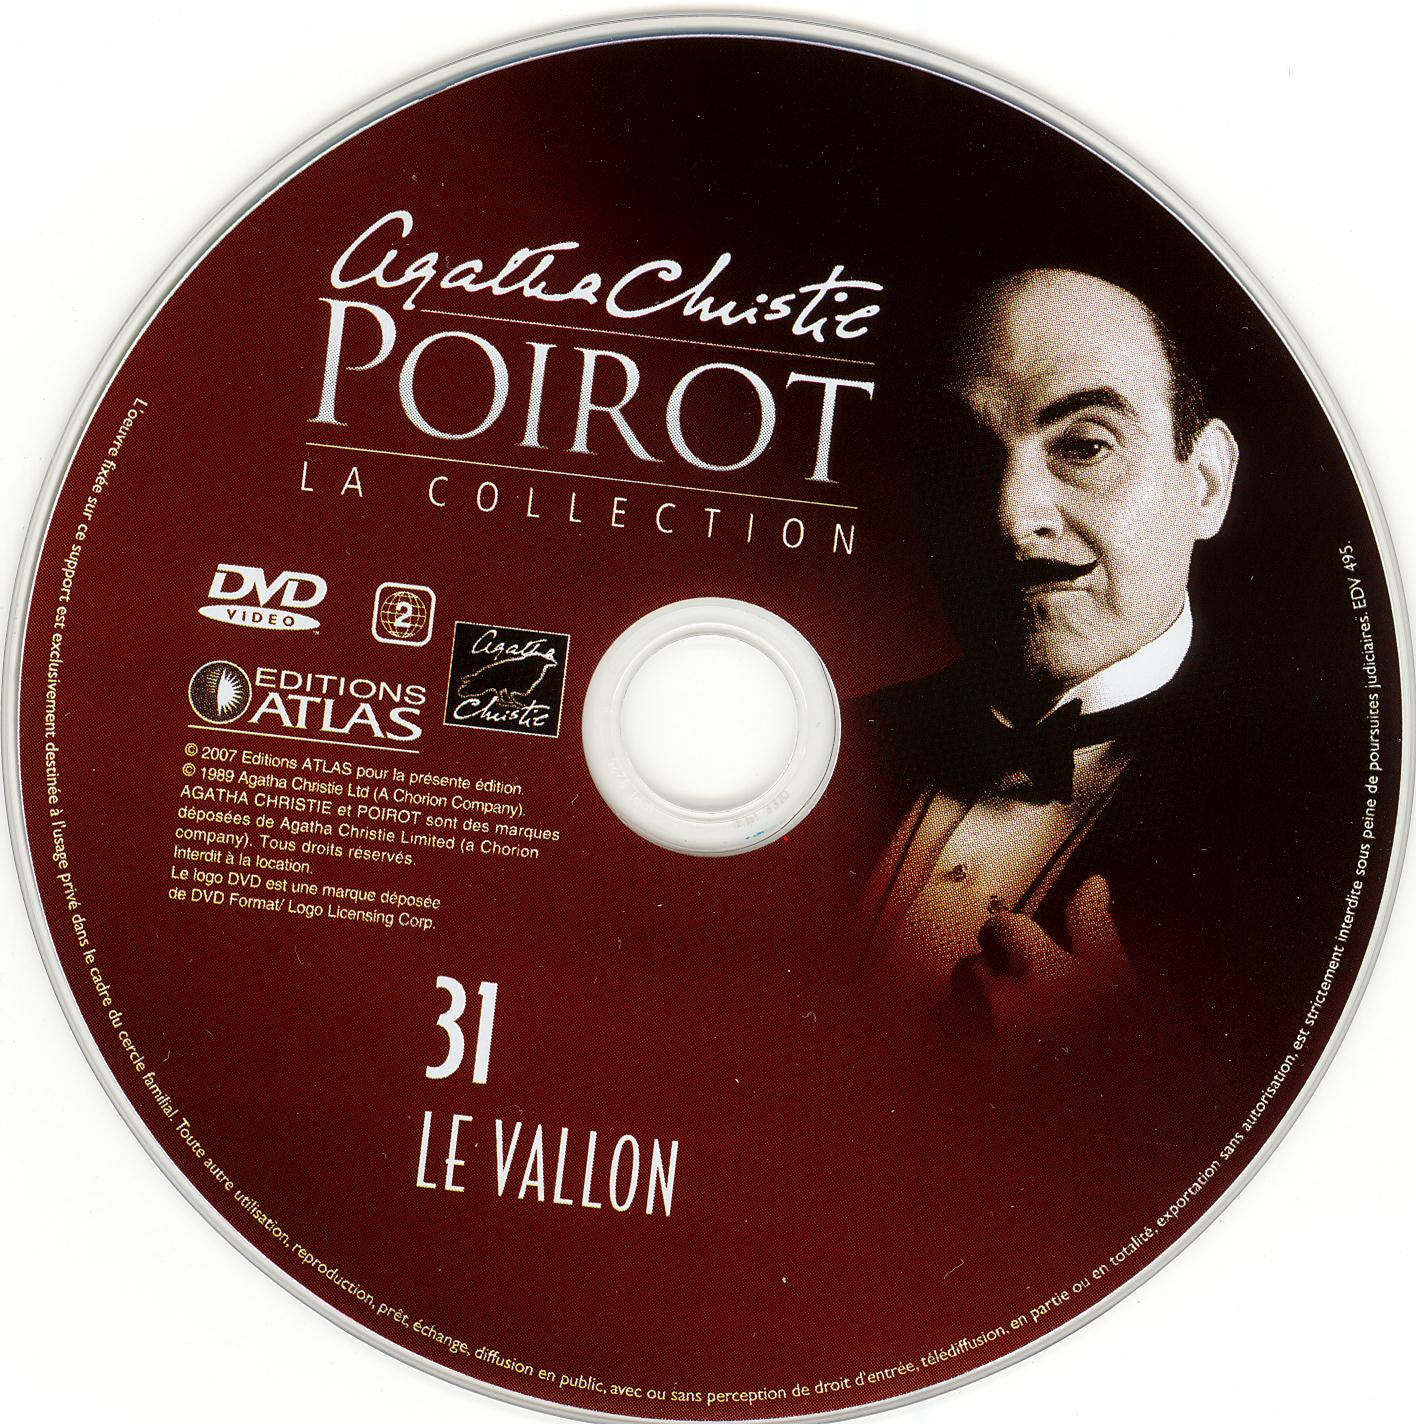 Hercule Poirot vol 31